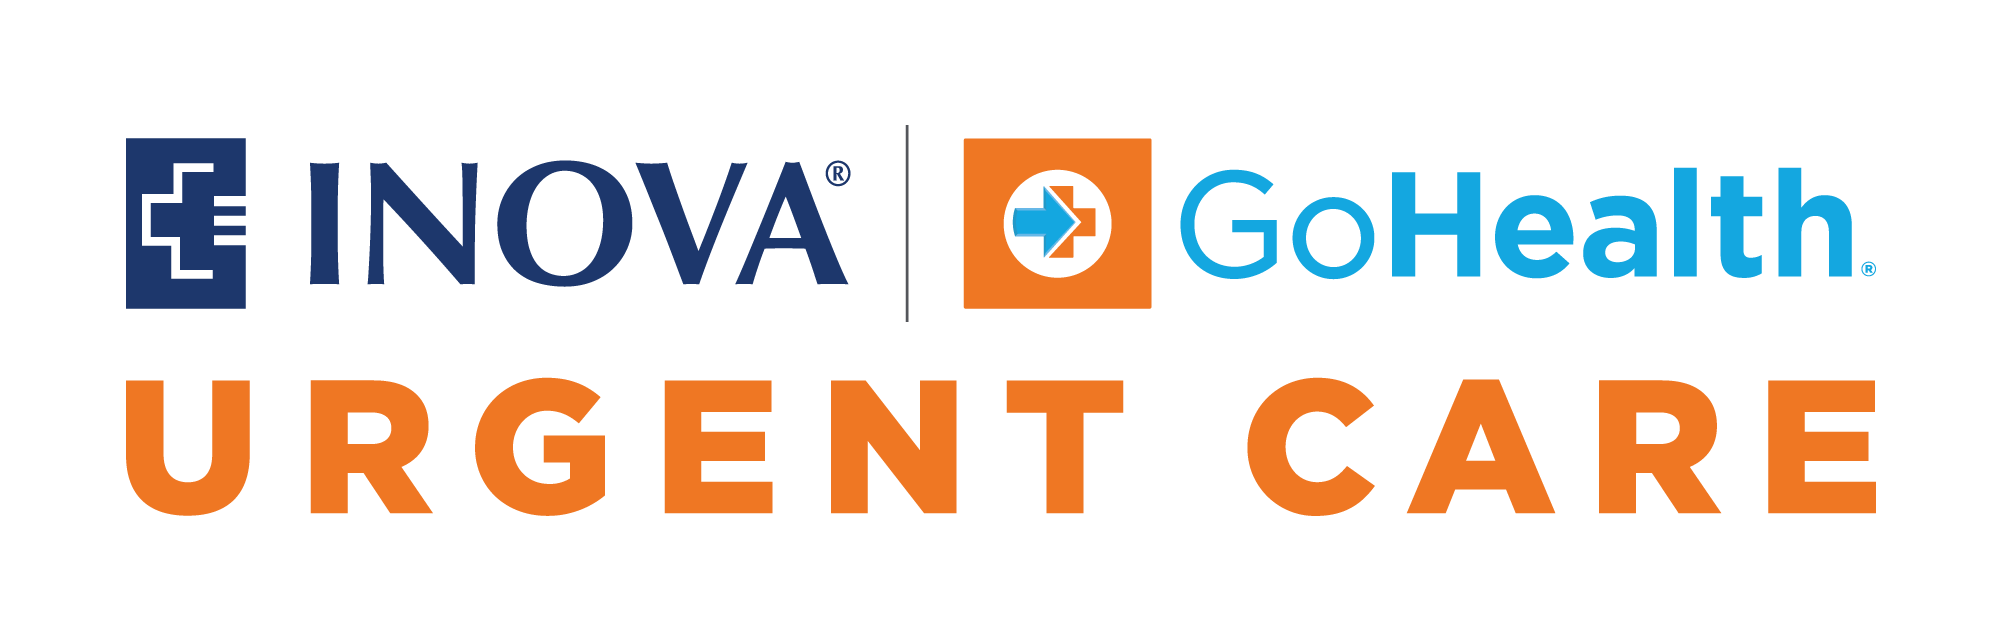 Inova- GoHealth Urgent Care - Reston Logo